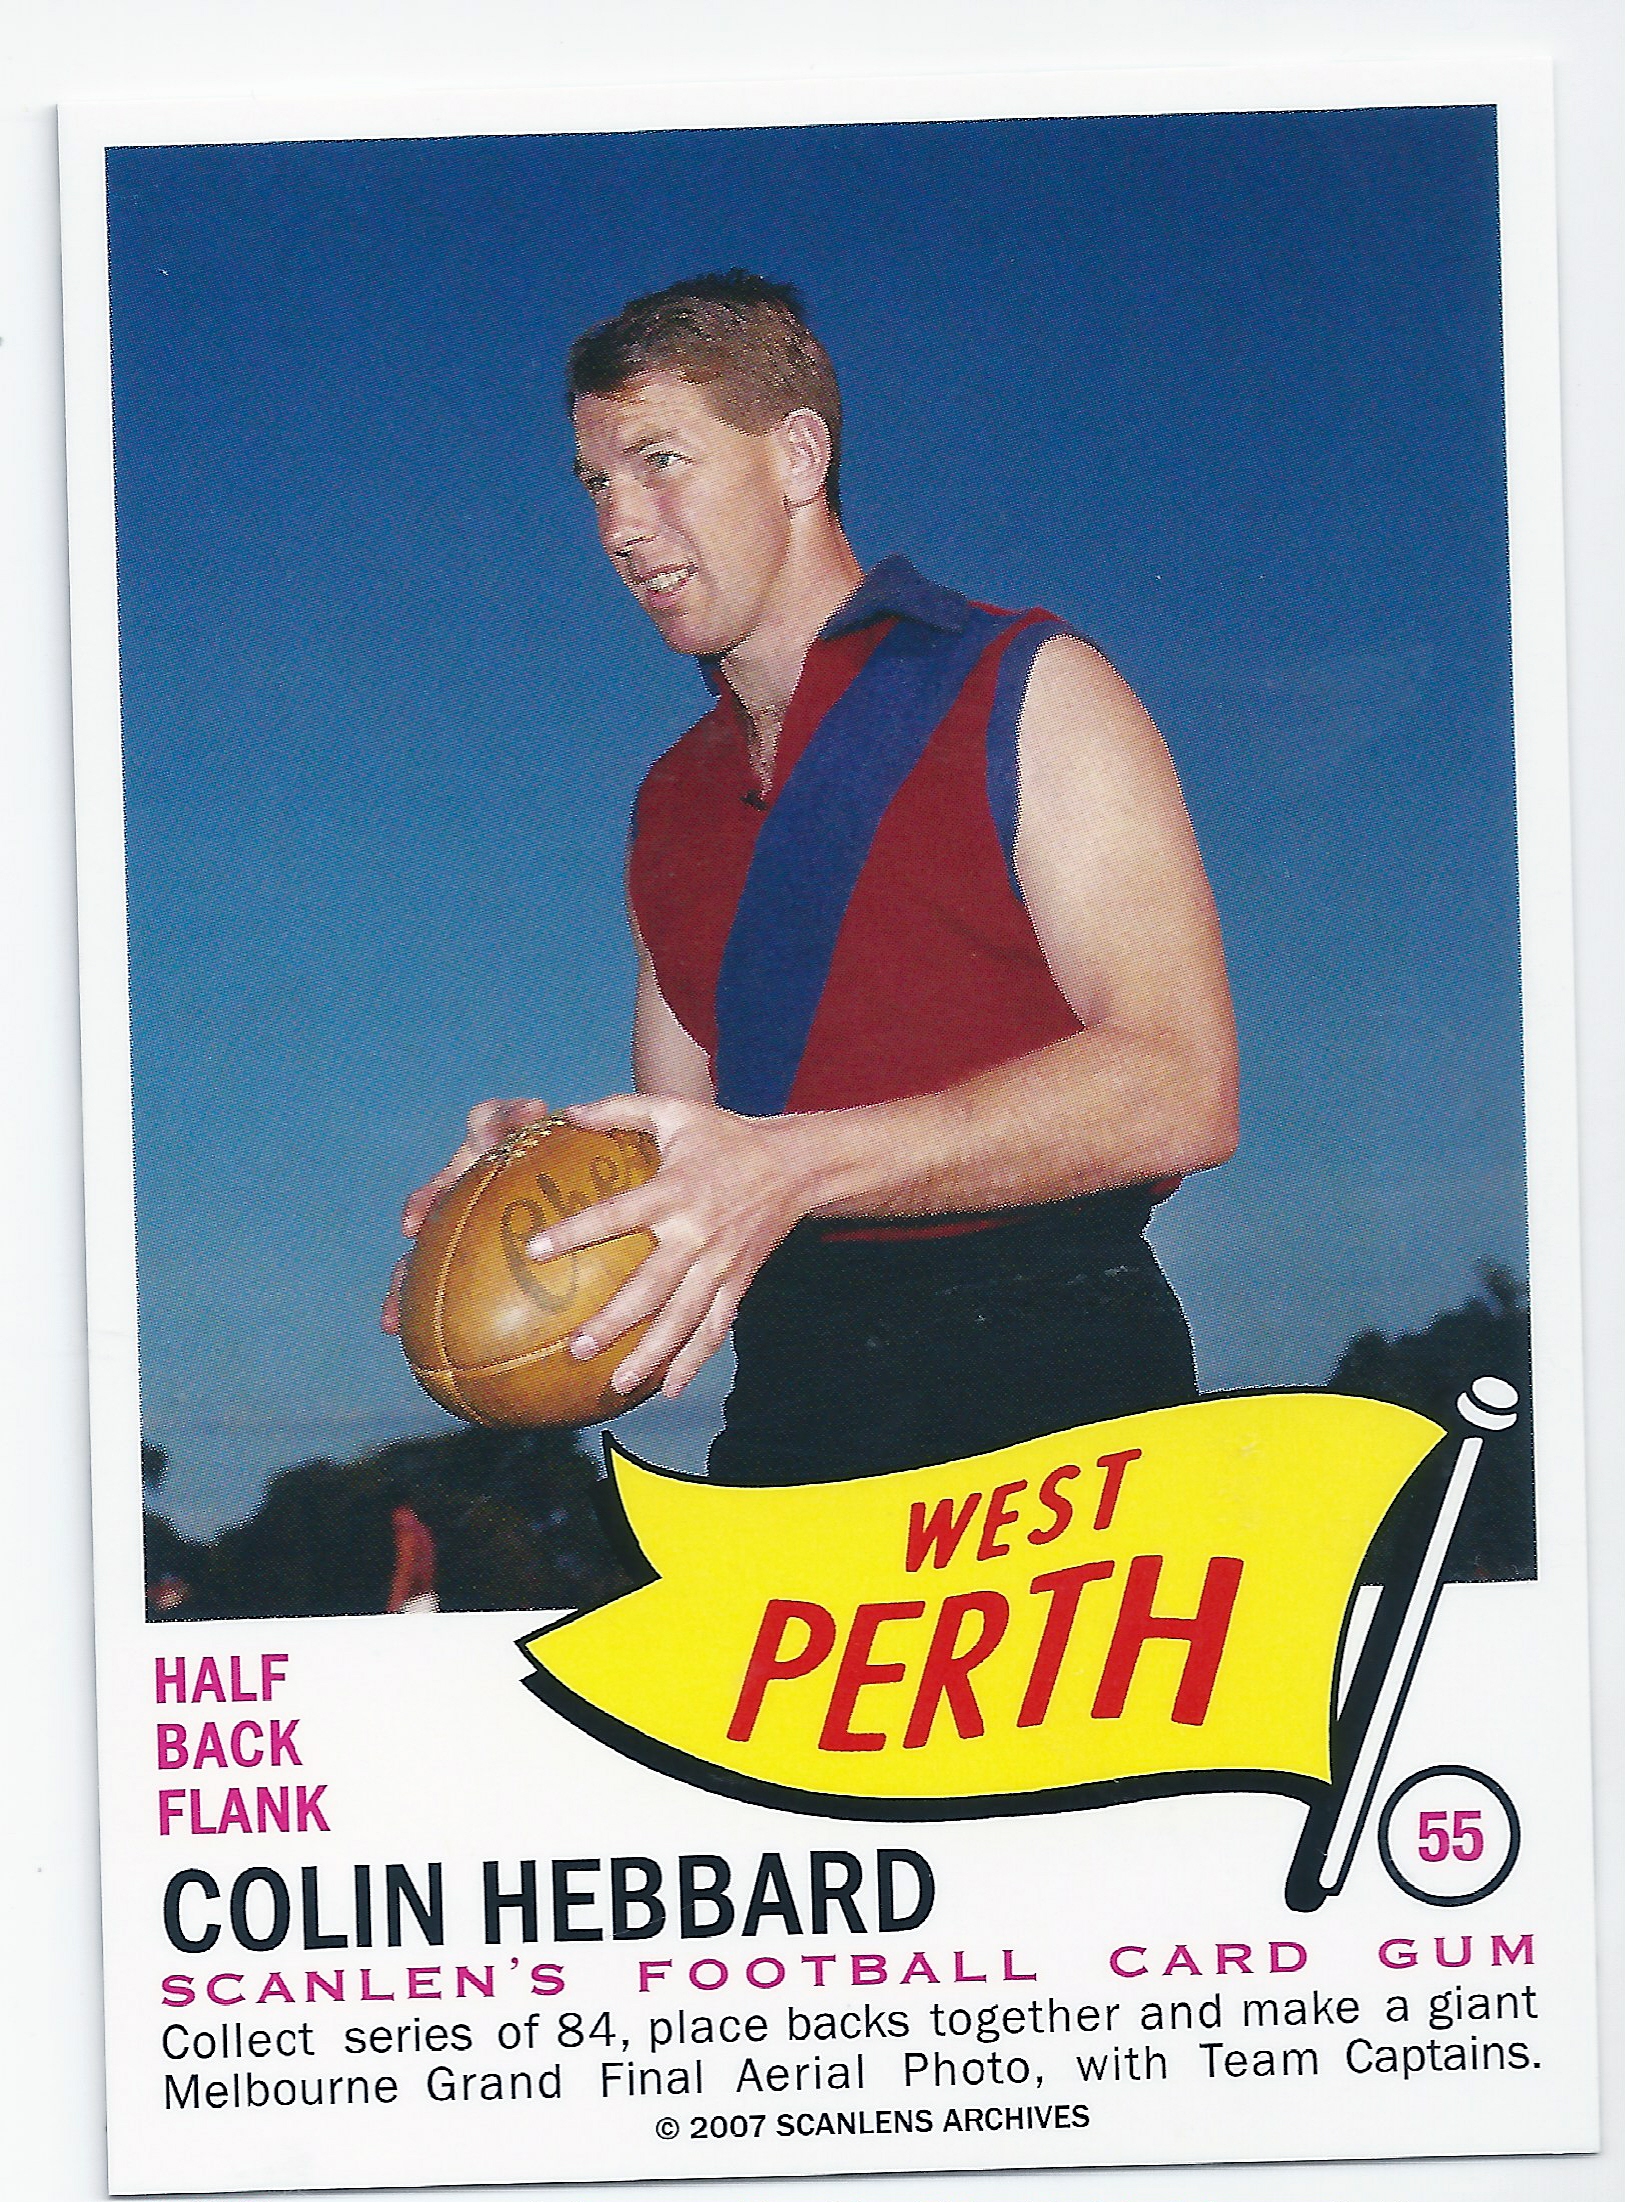 2007 – 1966 Scanlens Flag Archives (55) Colin Hebbard West Perth